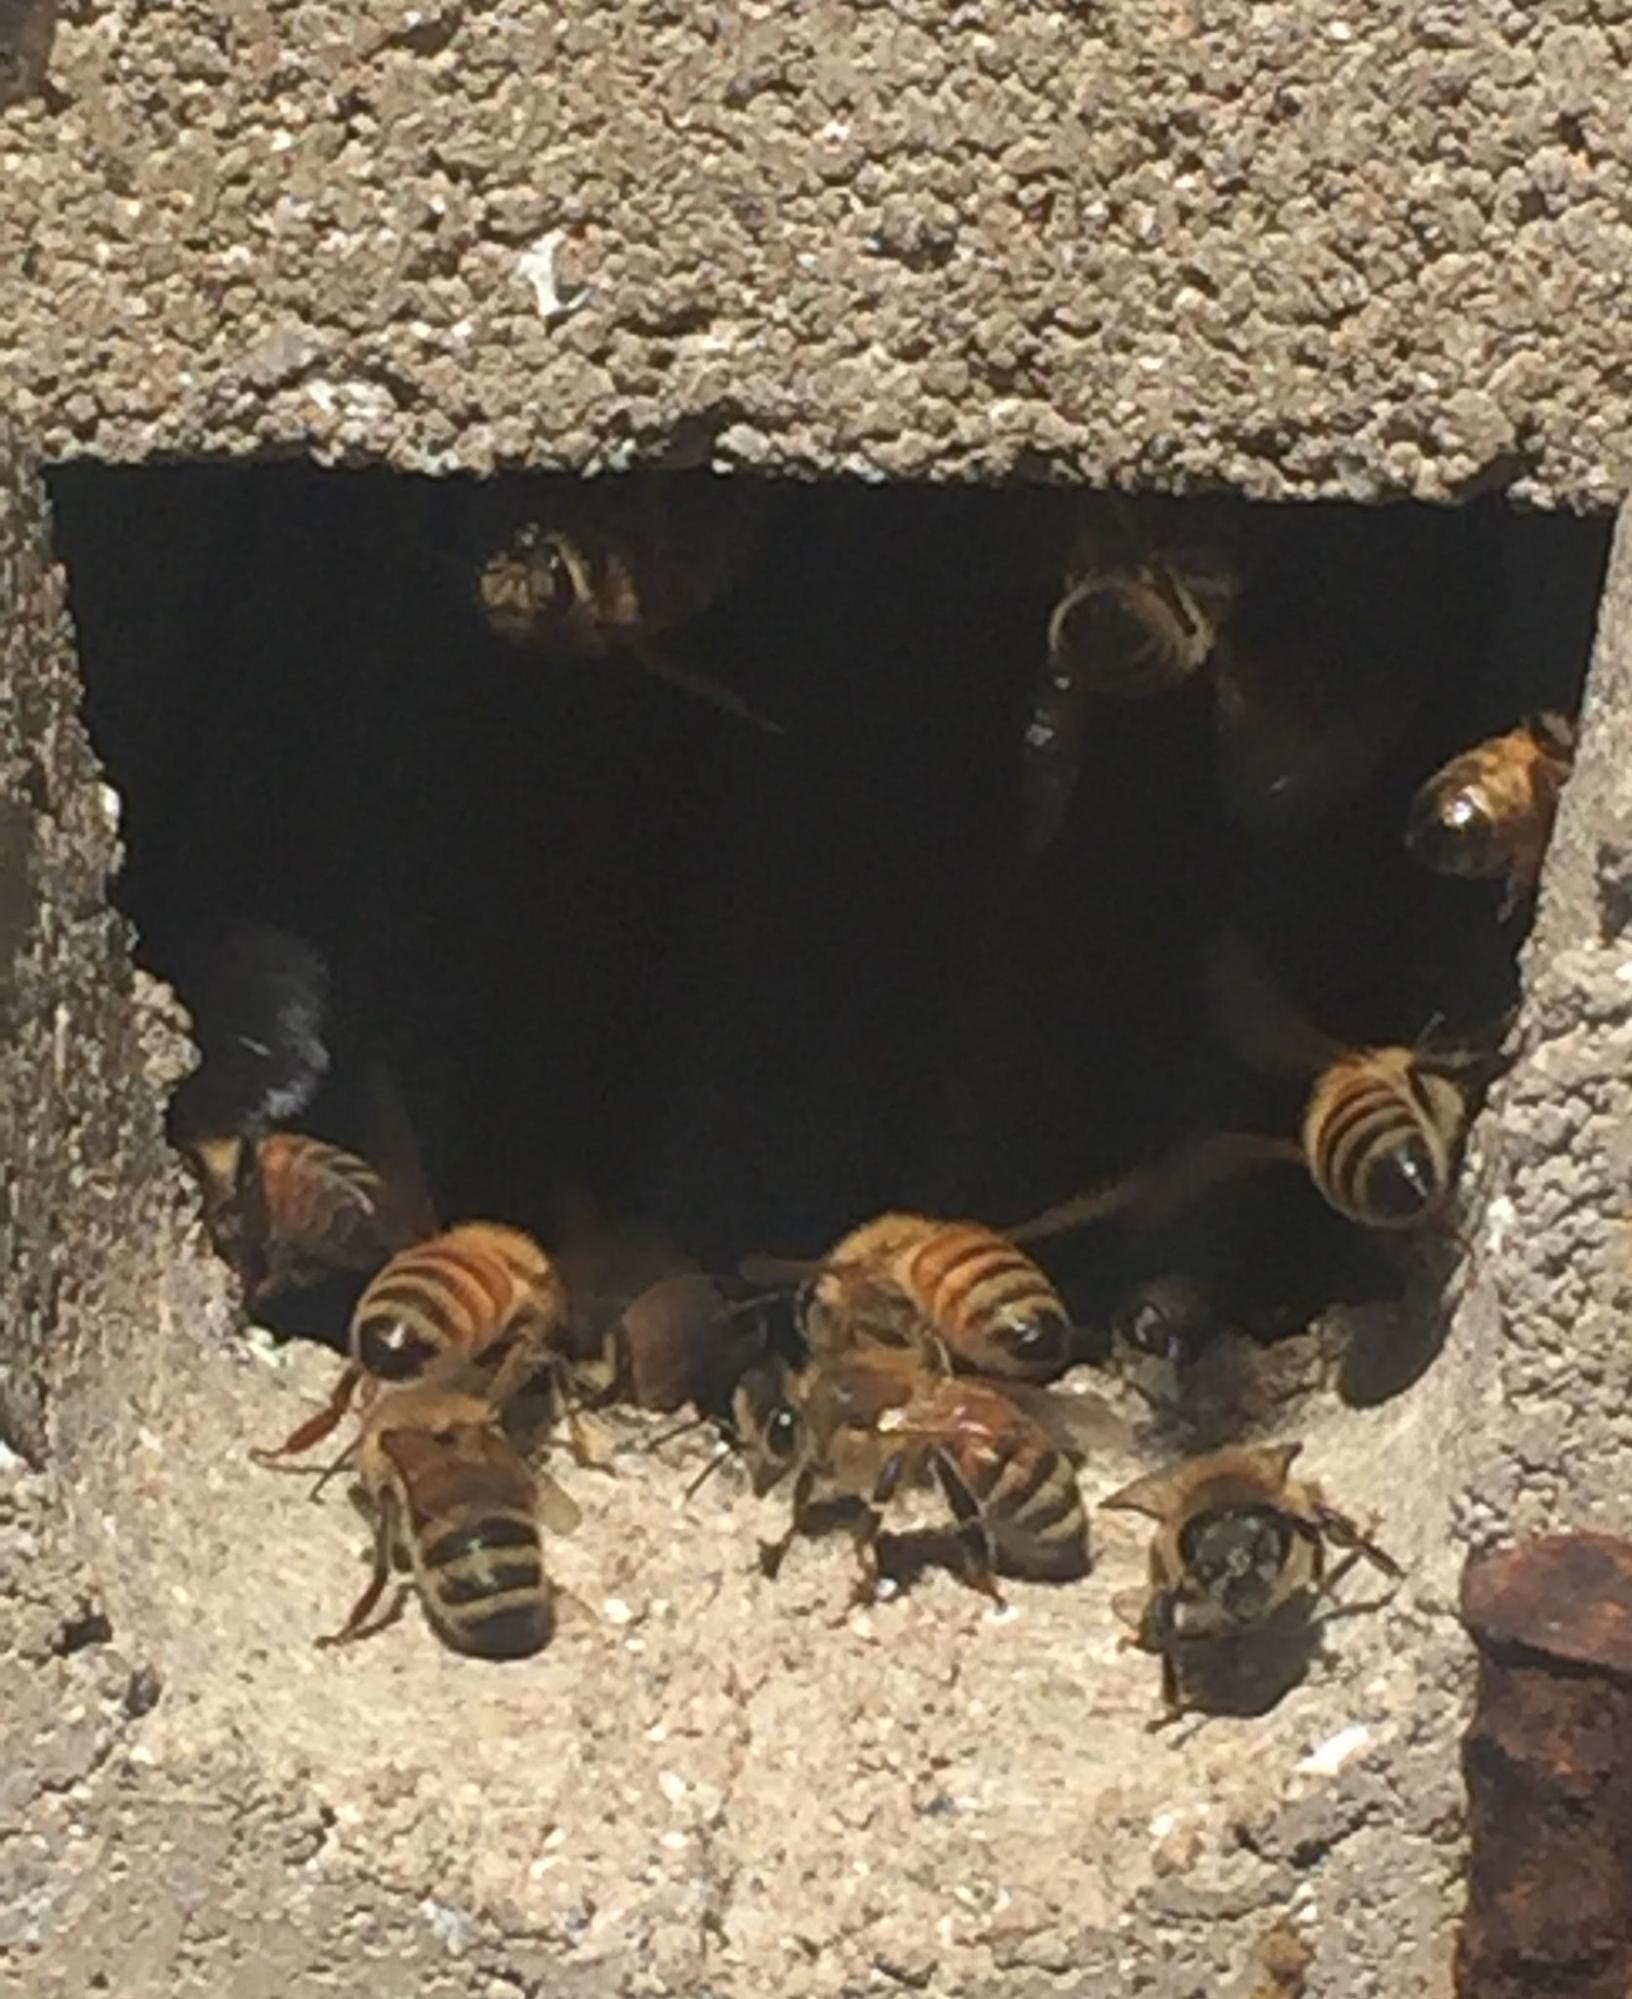 Bees at the entrance of a wall